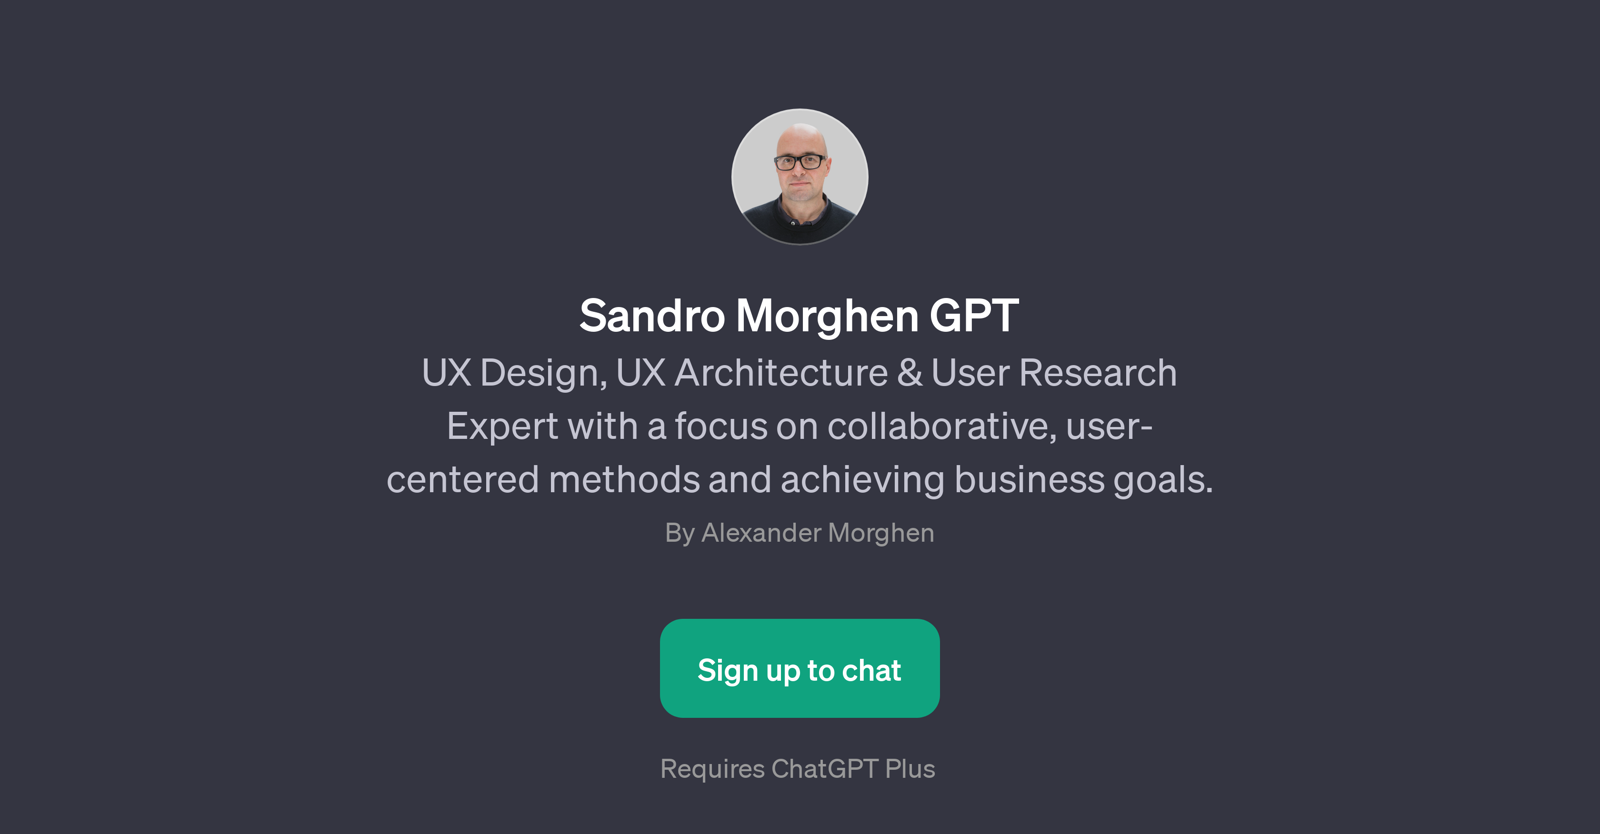 Sandro Morghen GPT website